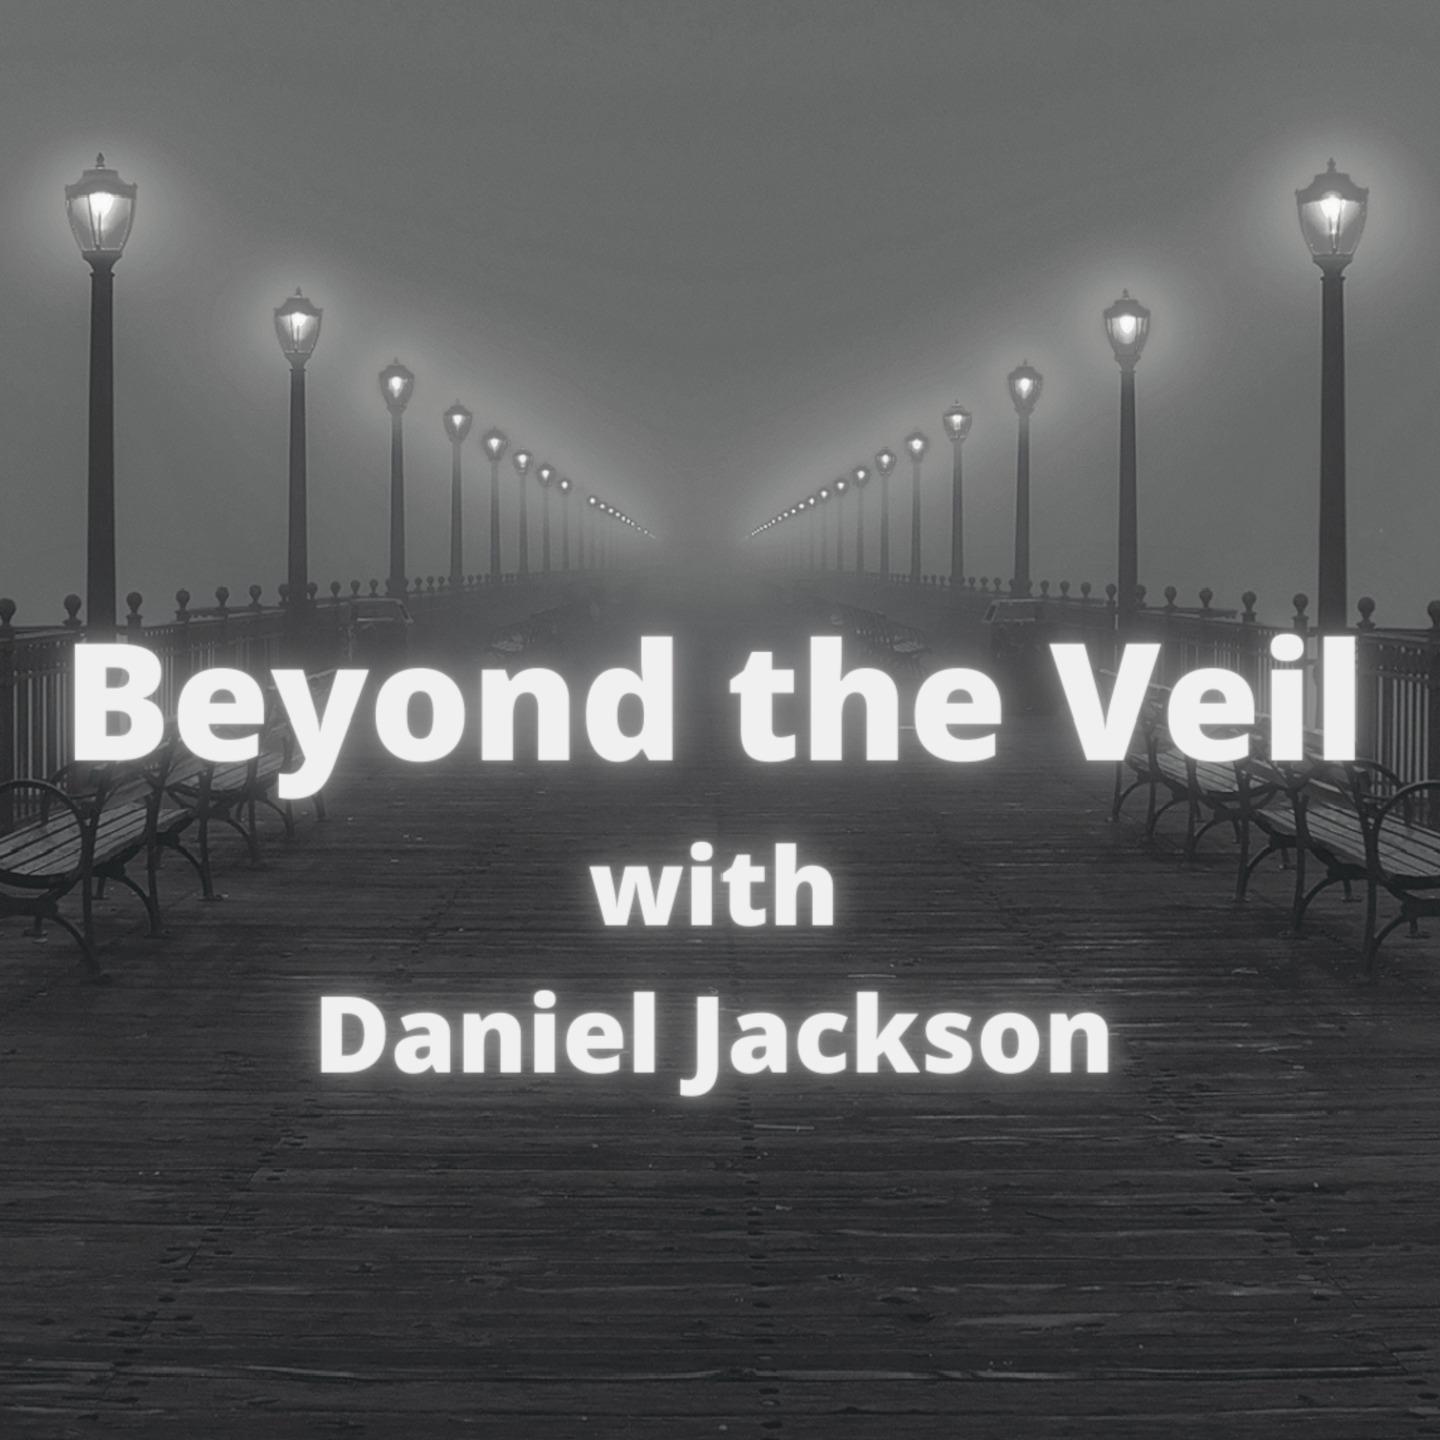 Beyond the Veil with Daniel Jackson